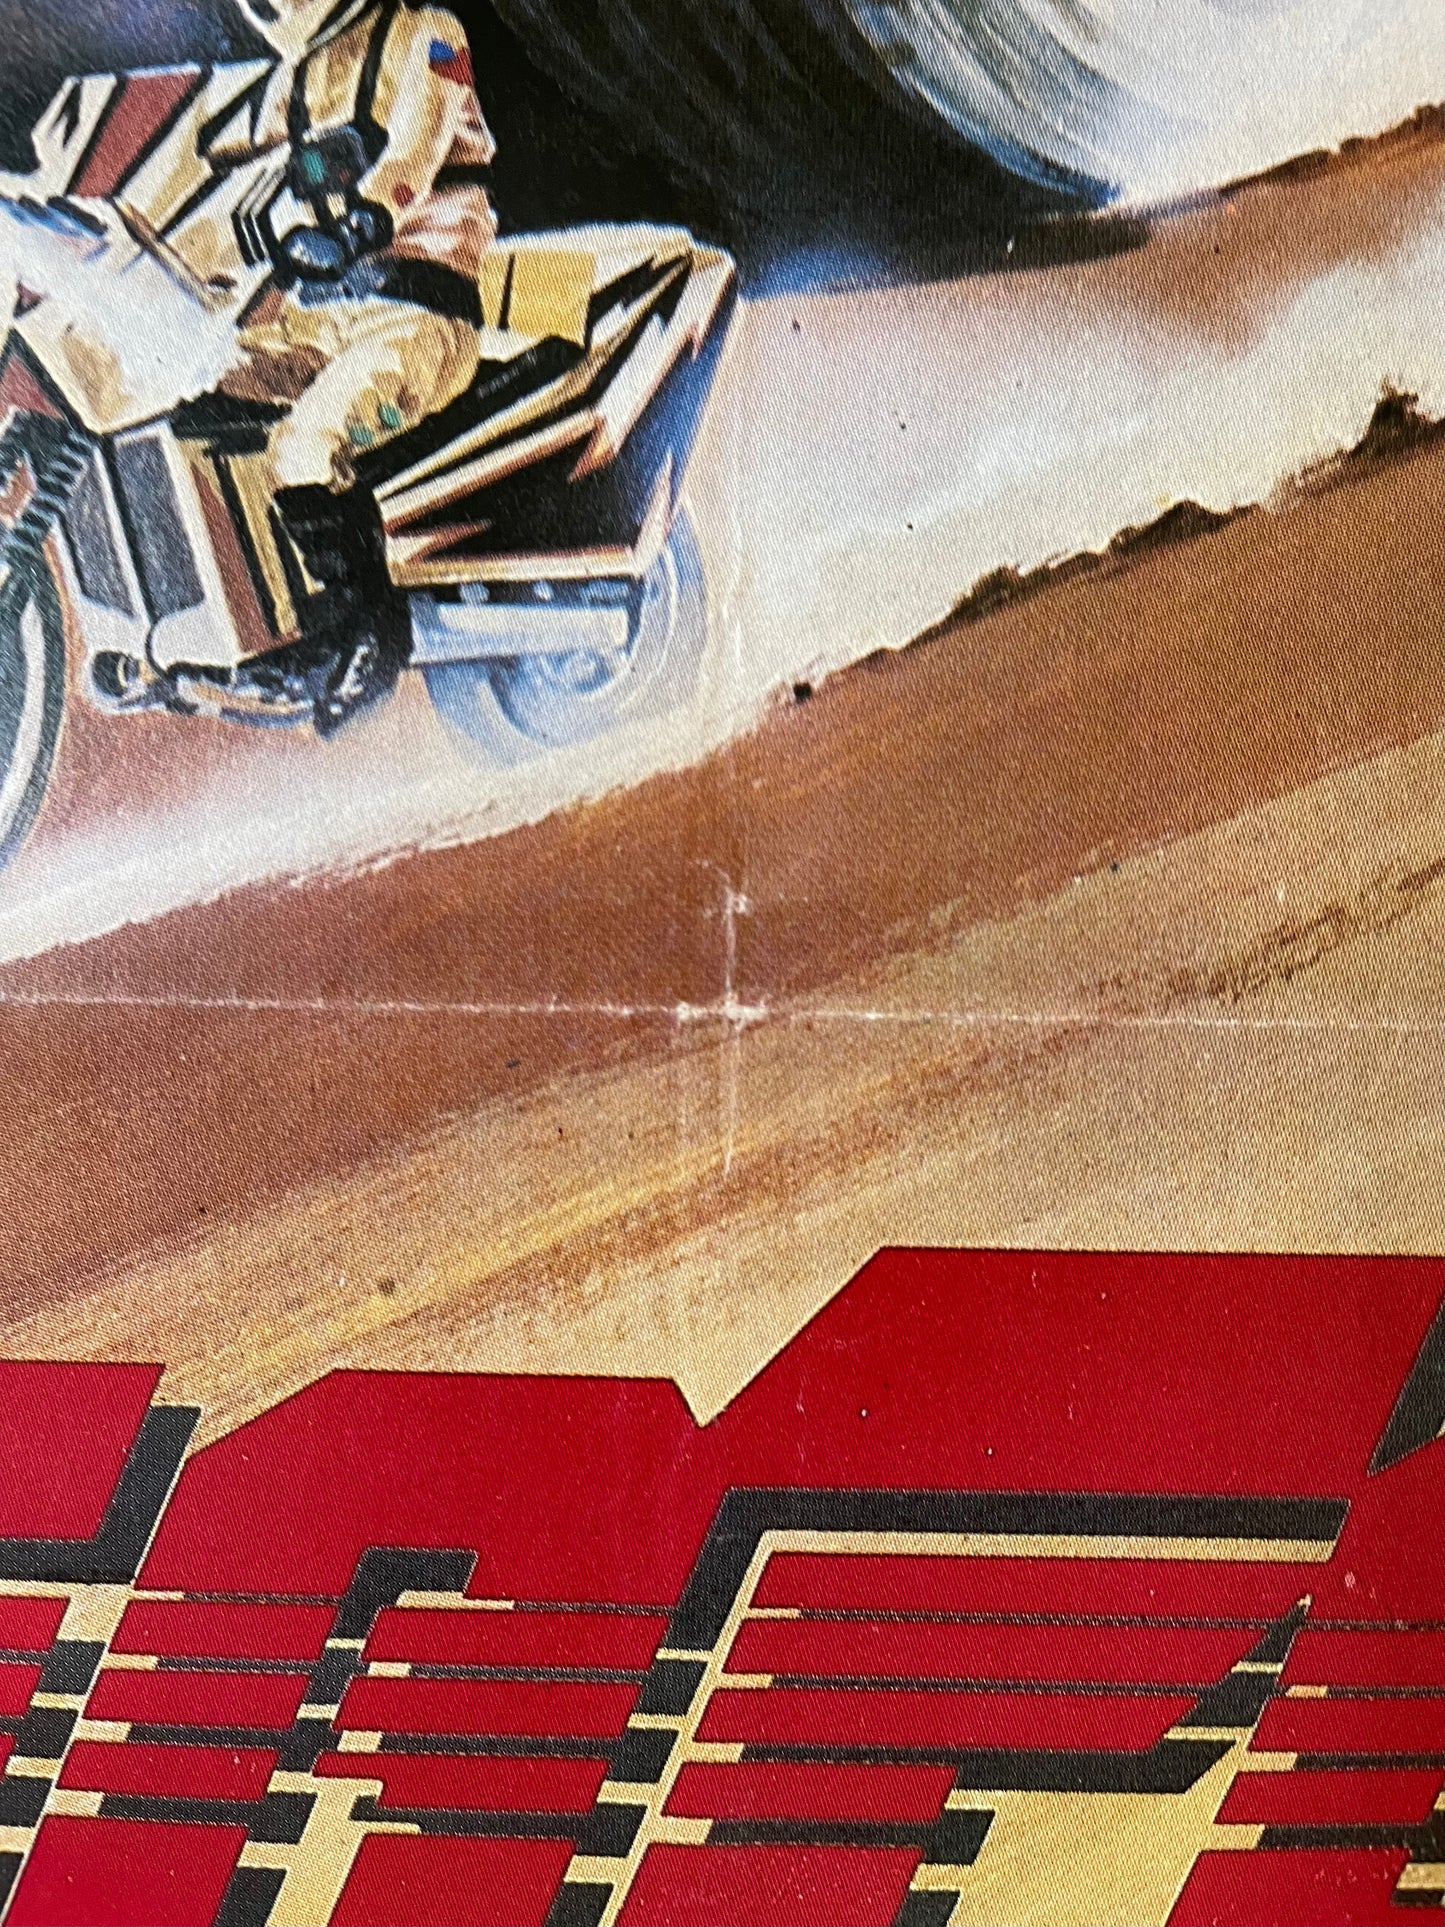 Megaforce (1982) - One Sheet